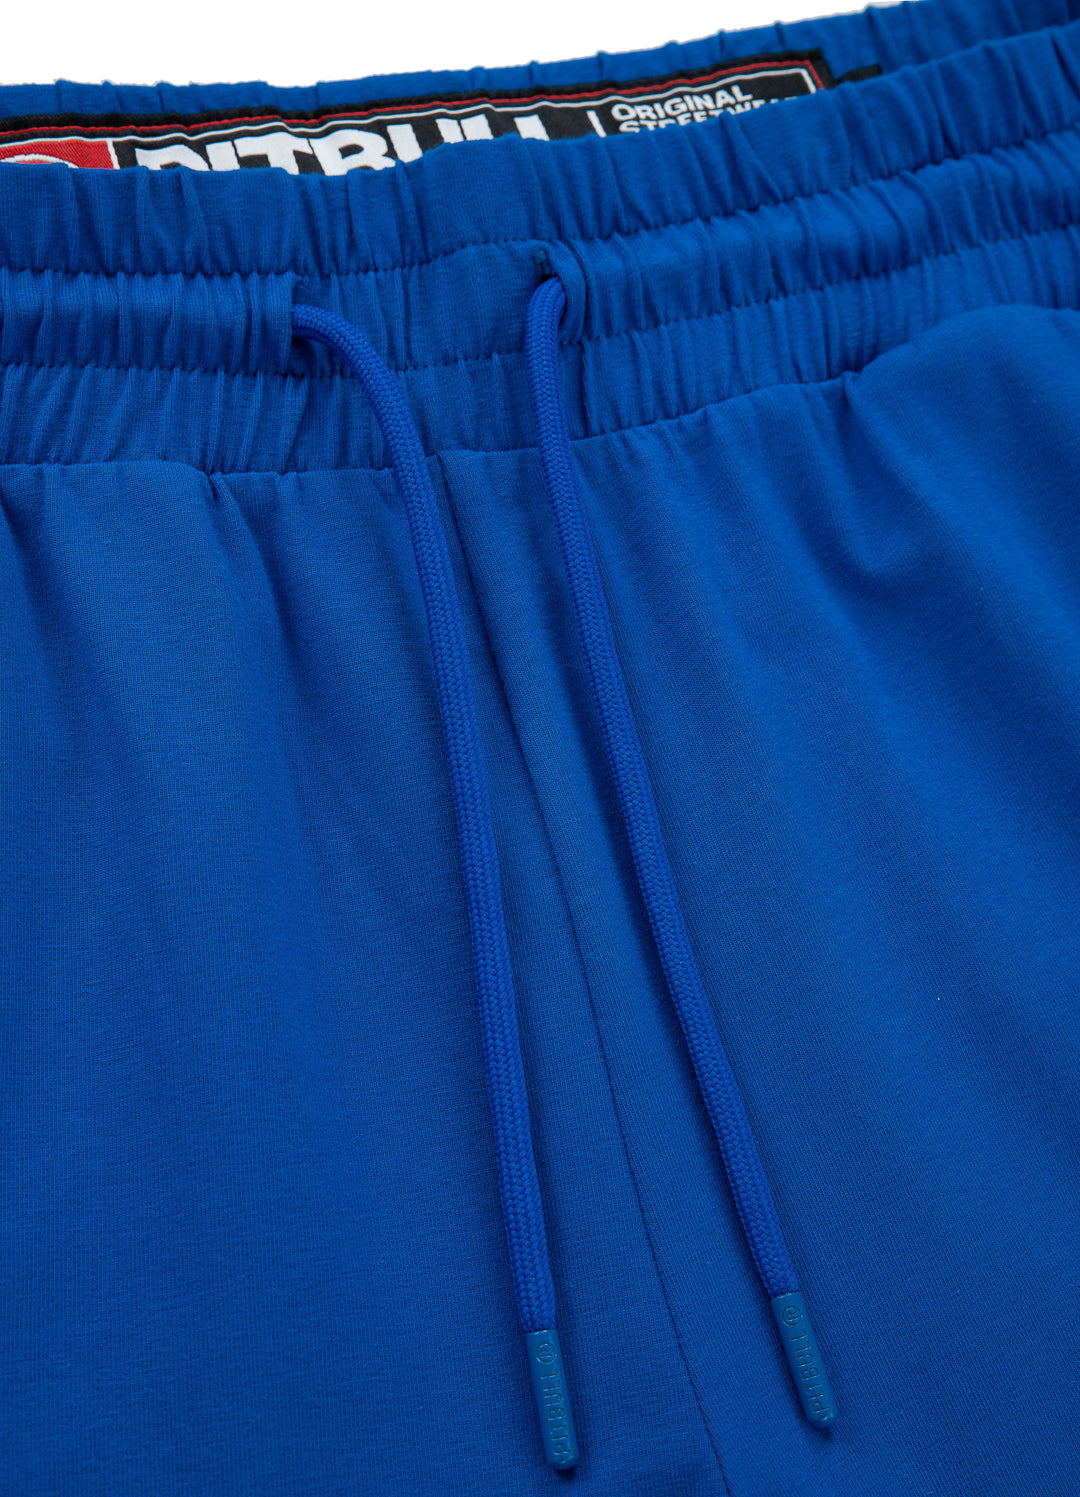 DURANGO Spandex Royal Blue Jogging Pants.